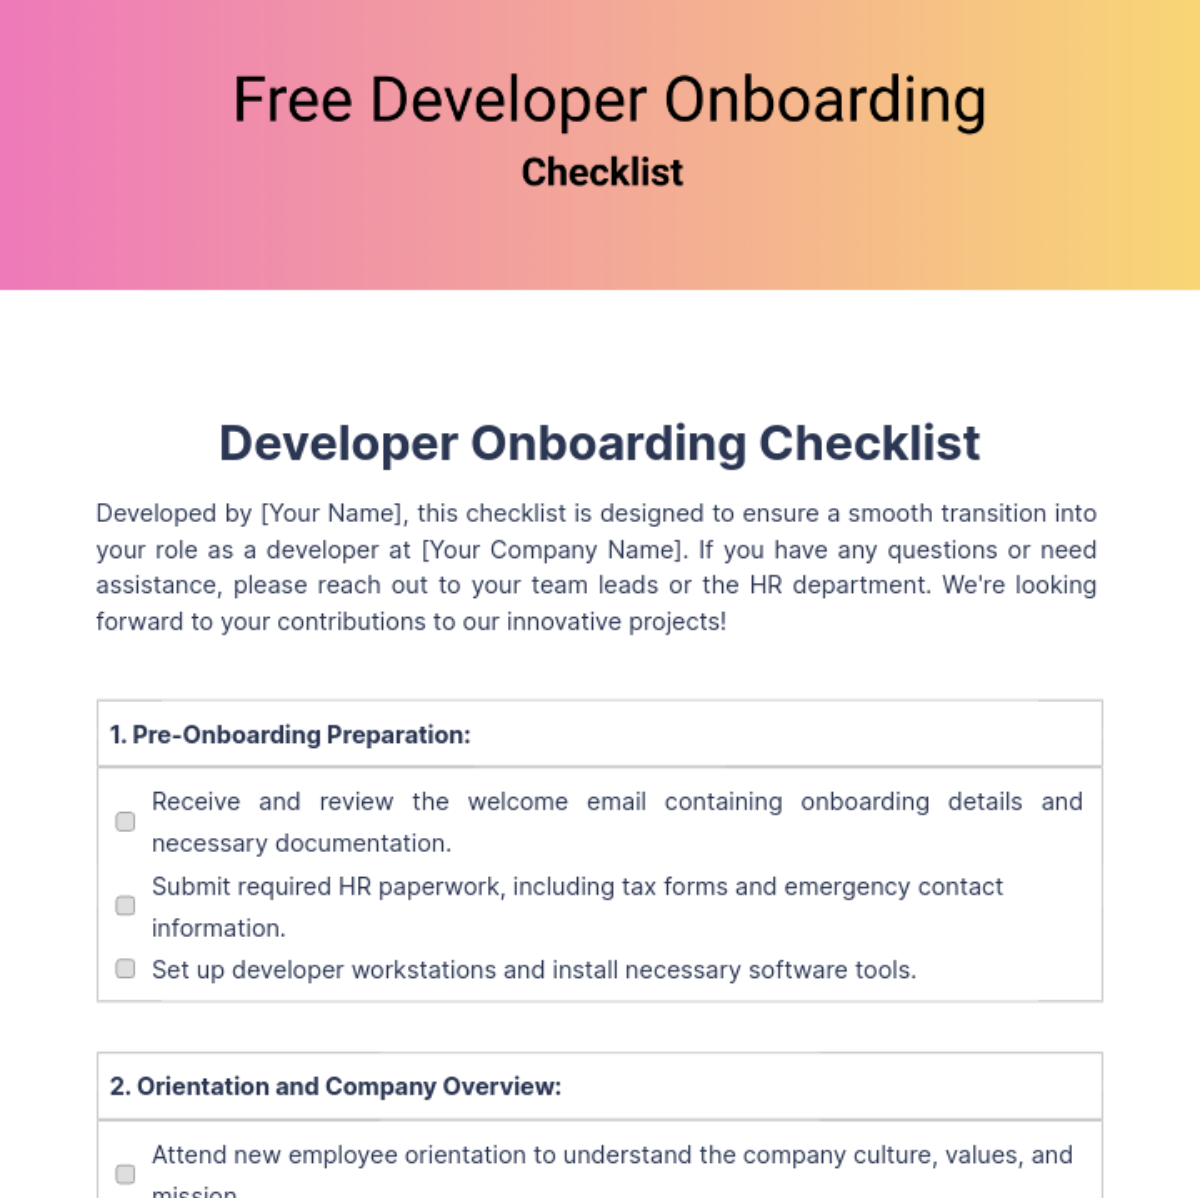 Free Developer Onboarding Checklist Template